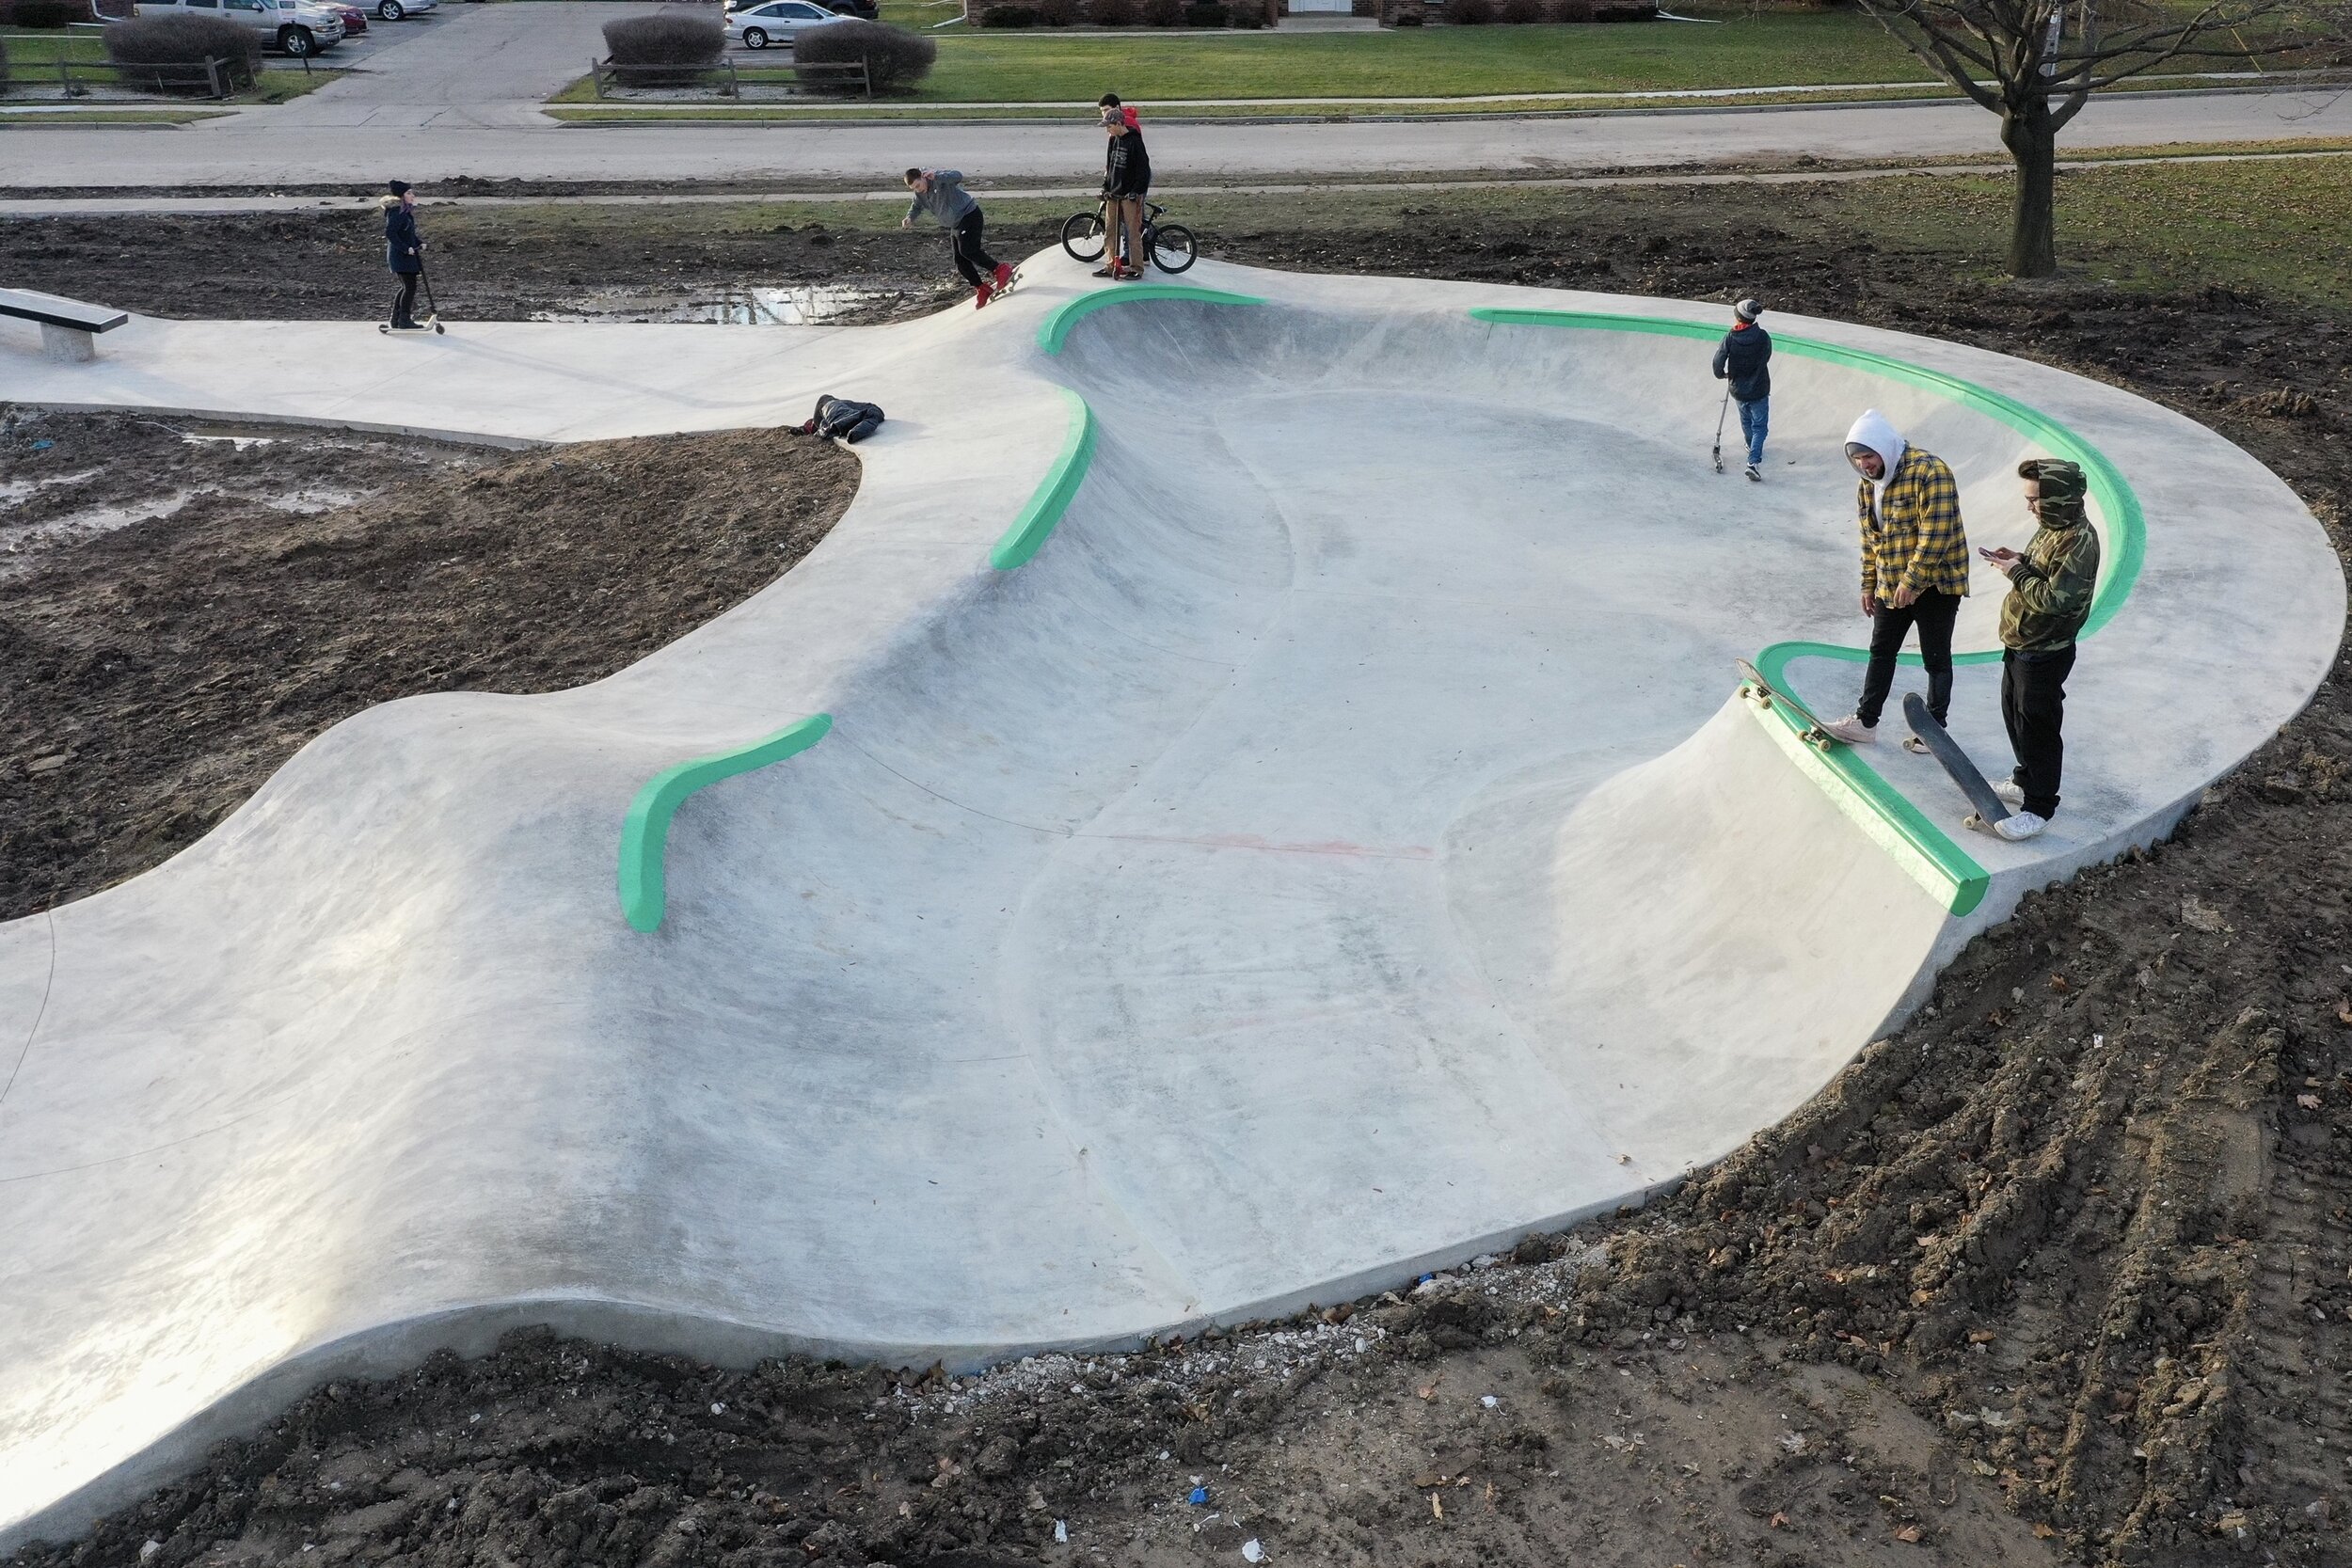 Mini ramp(ish) fun zone with bumps &amp; jumps on the Sturtevant #skatepath 🔂